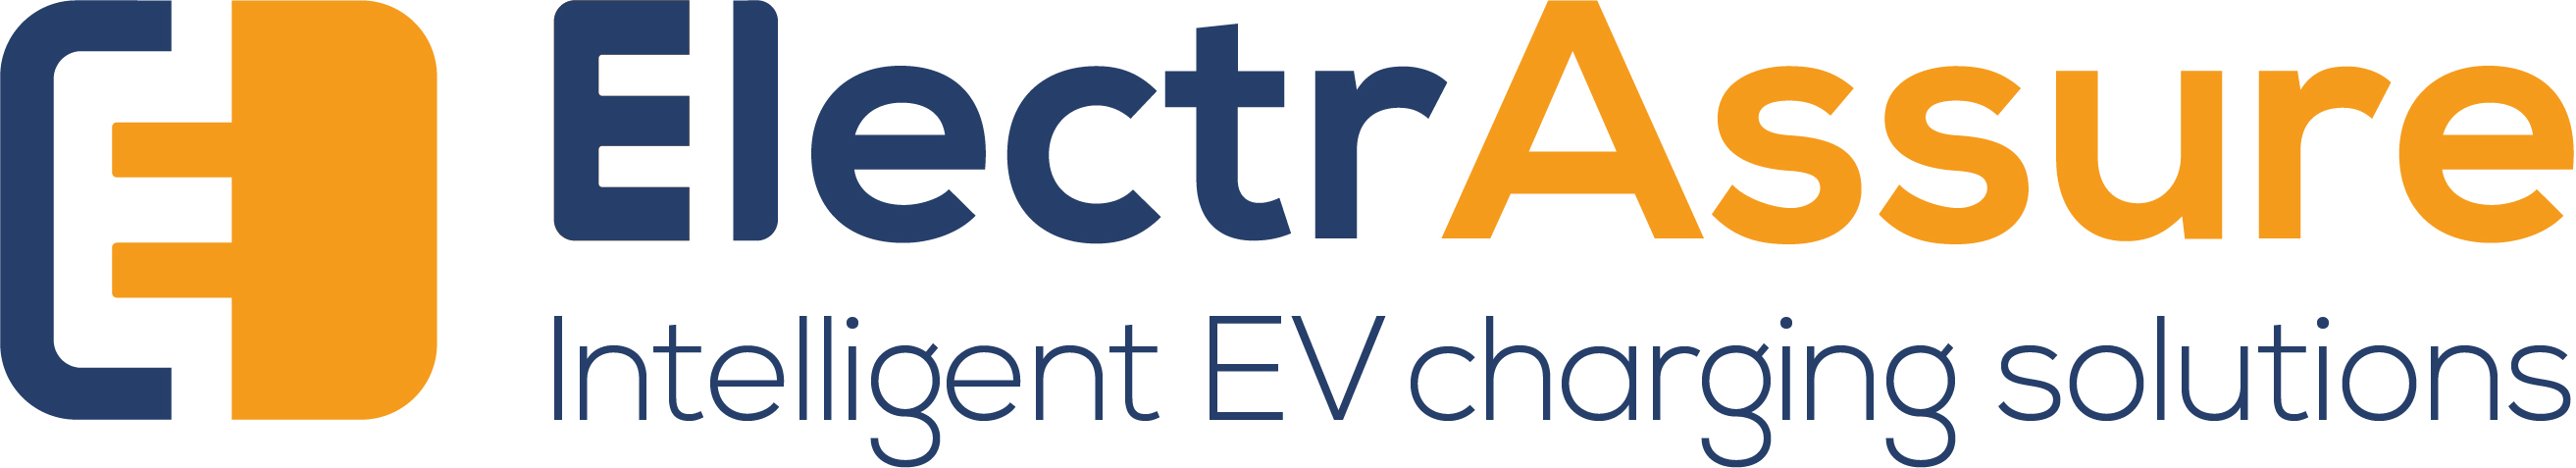 Organisation Logo - ElectrAssure Ltd